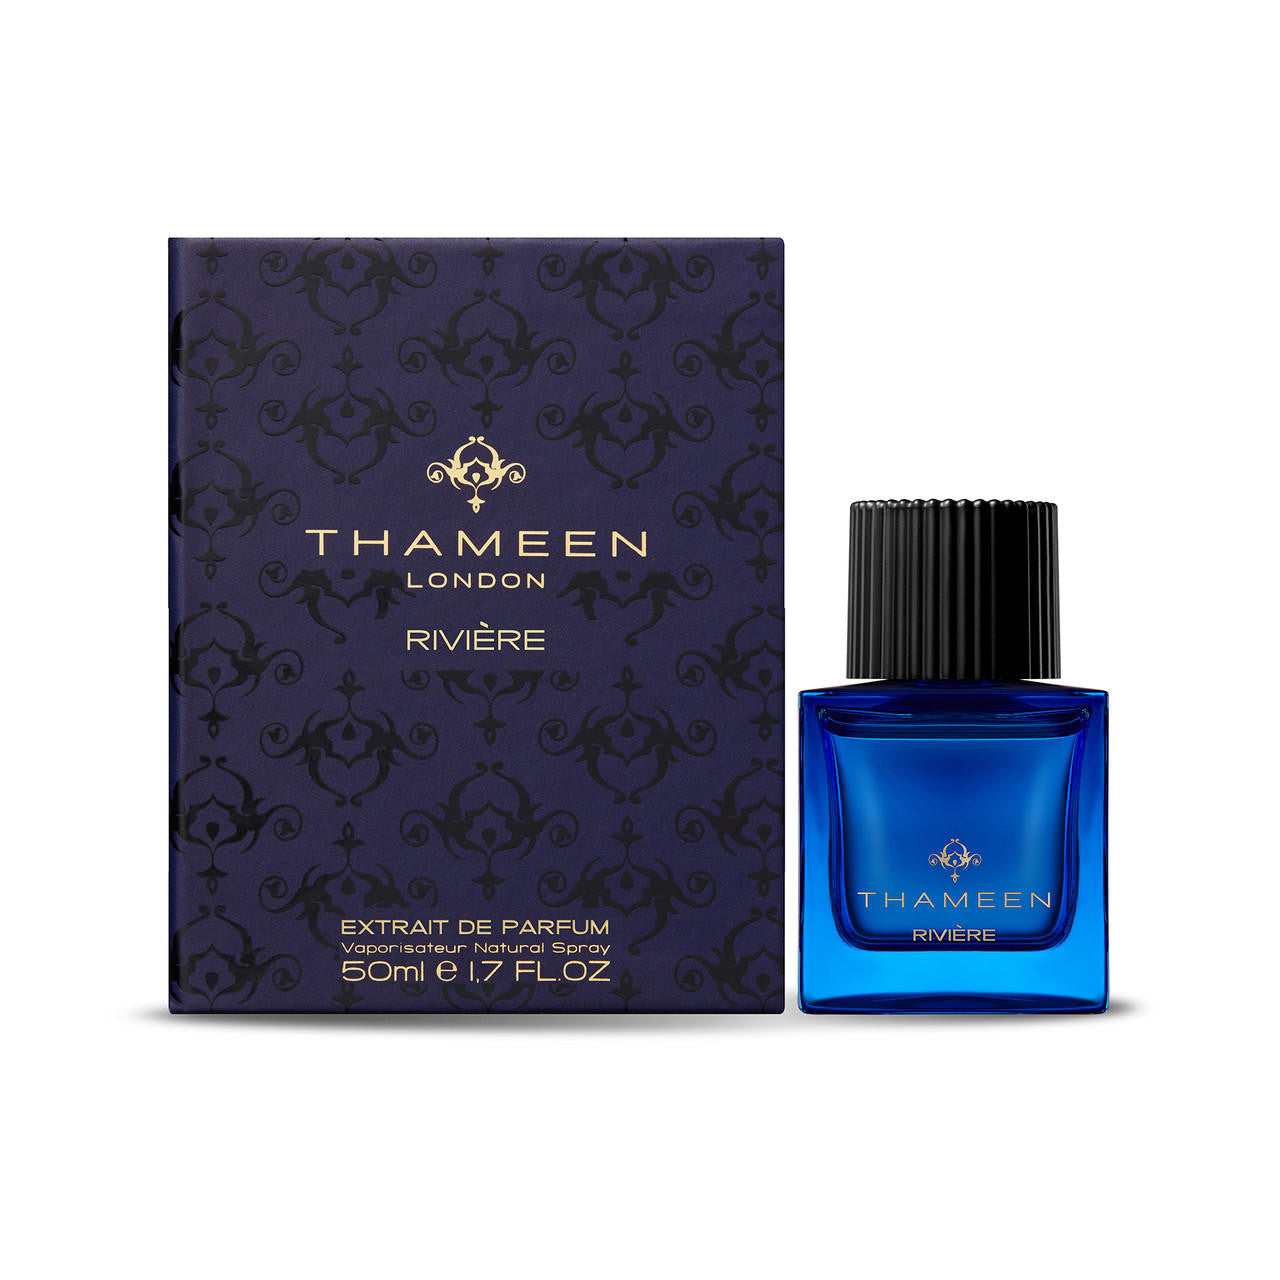  Thameen Riviere Extrait de Parfum 